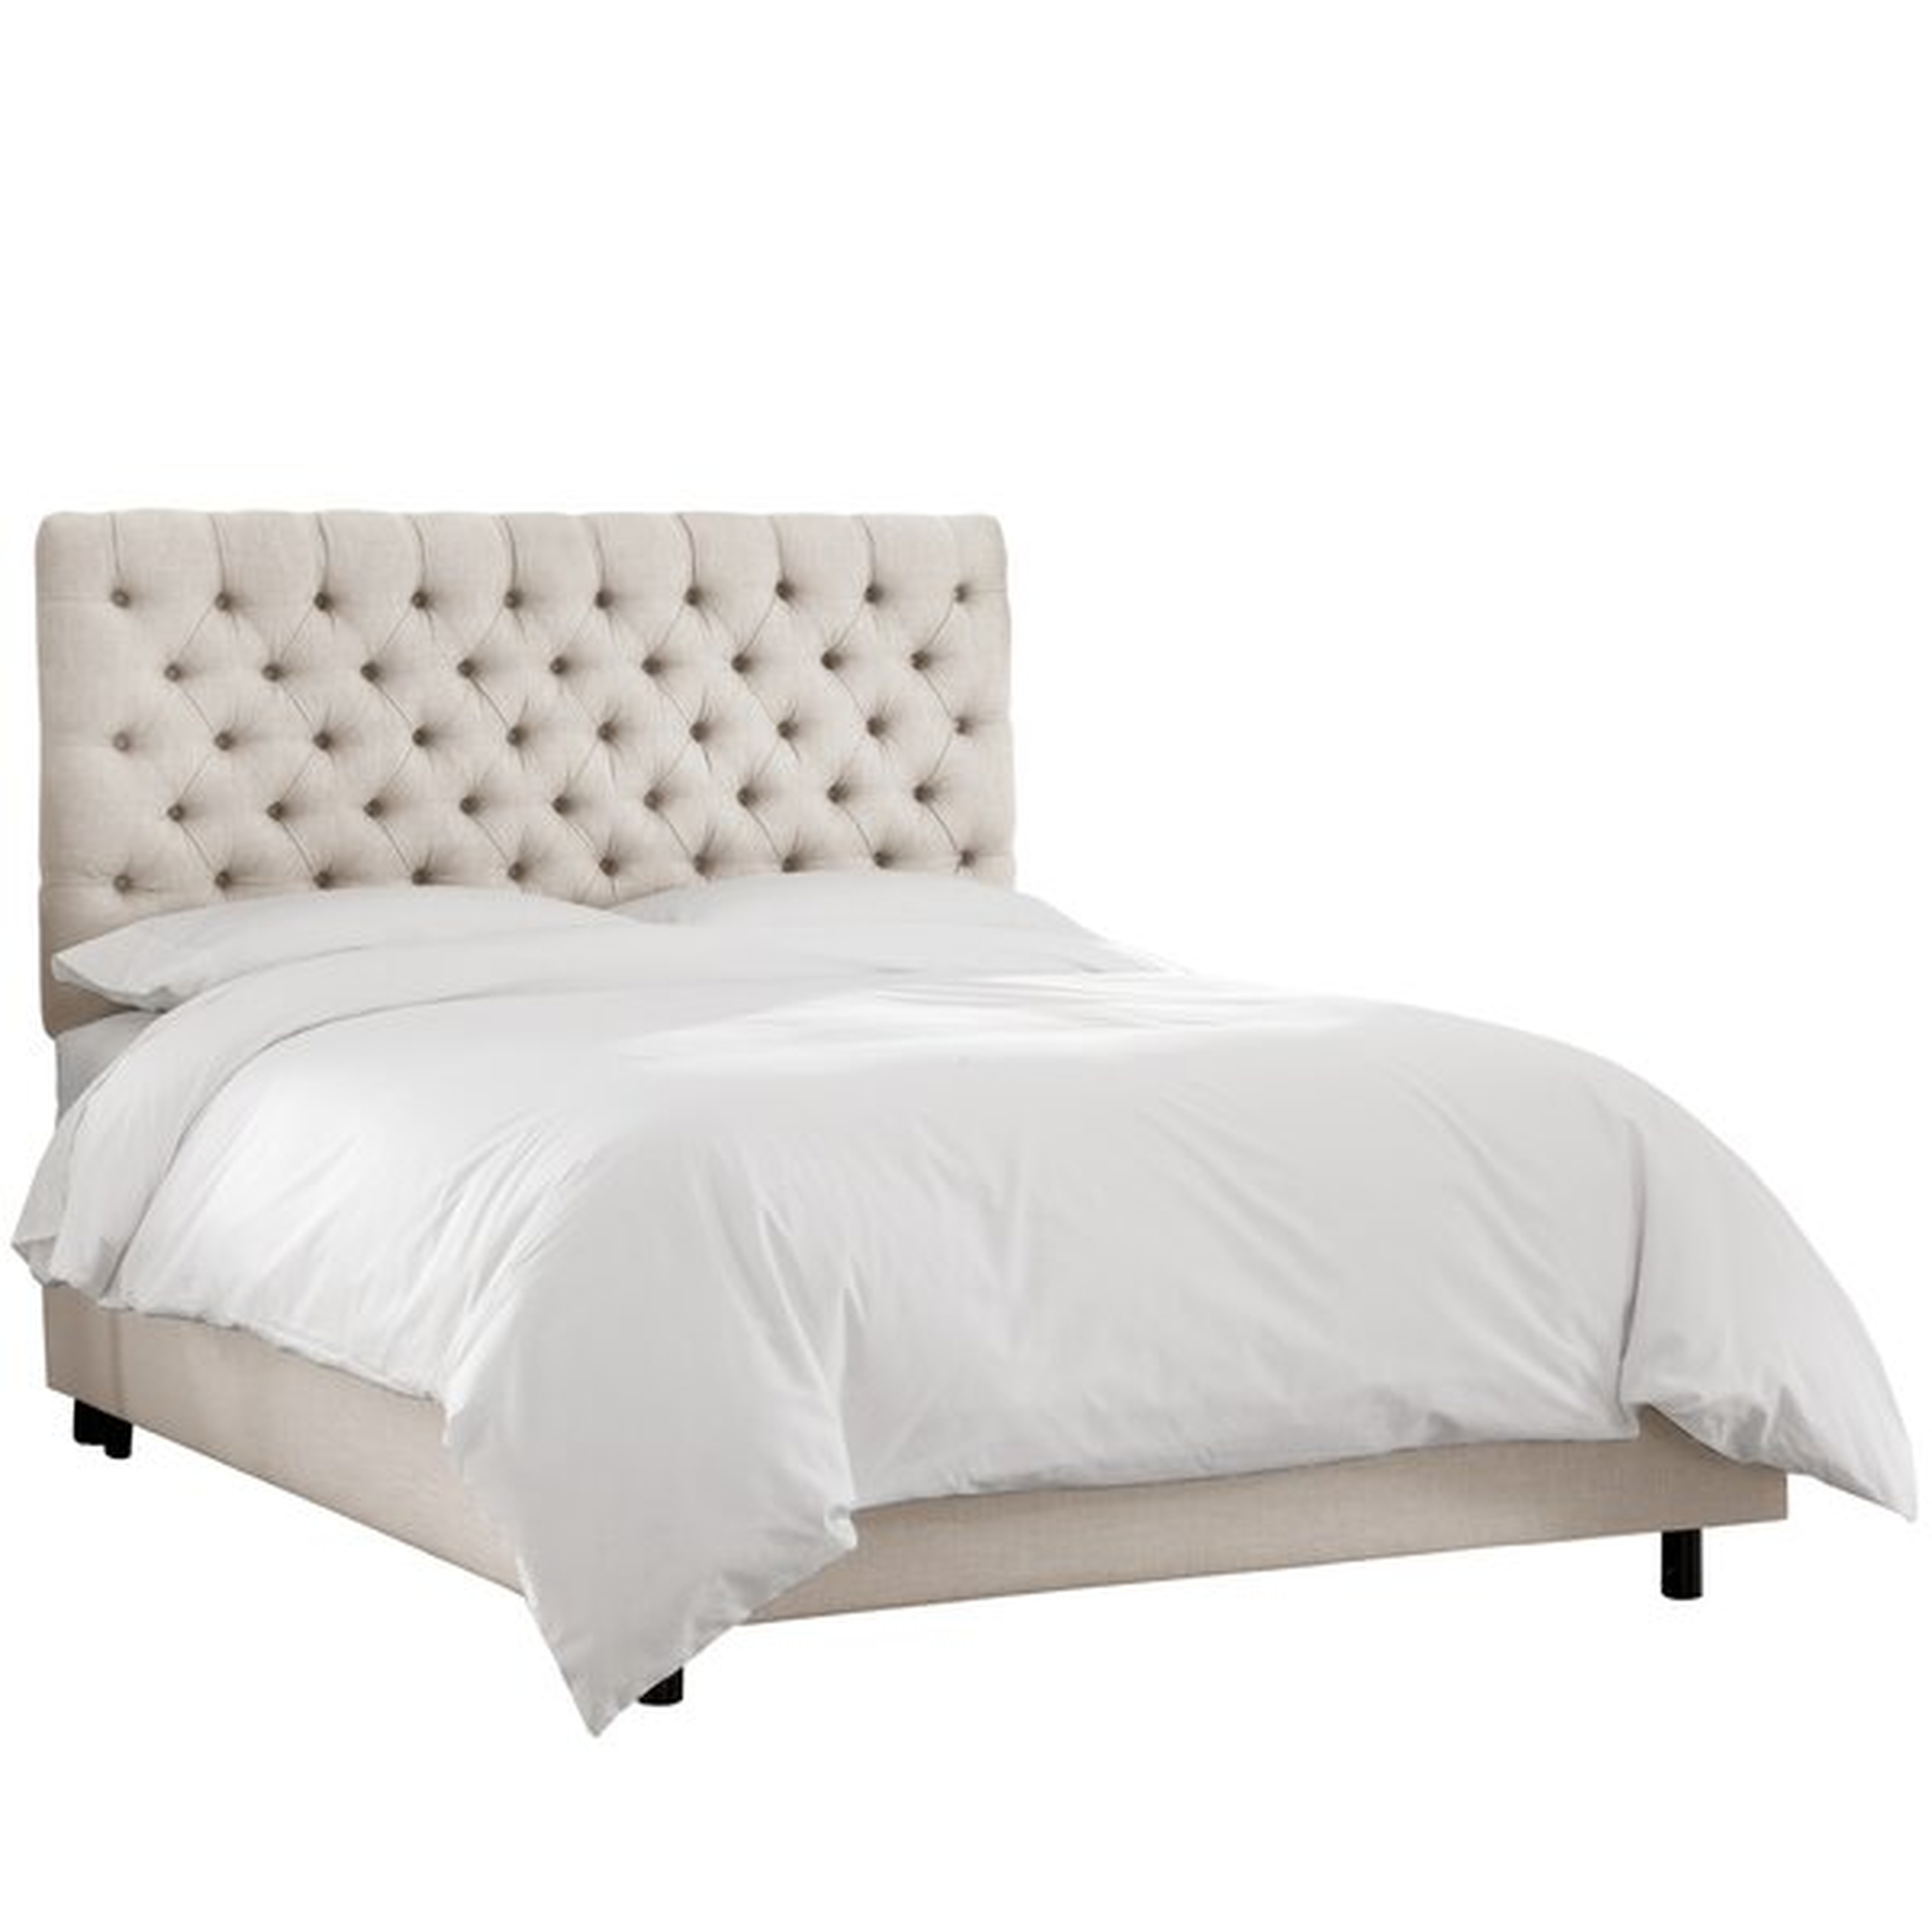 Tufted Upholstered Panel Bed - King - linen talc - Wayfair